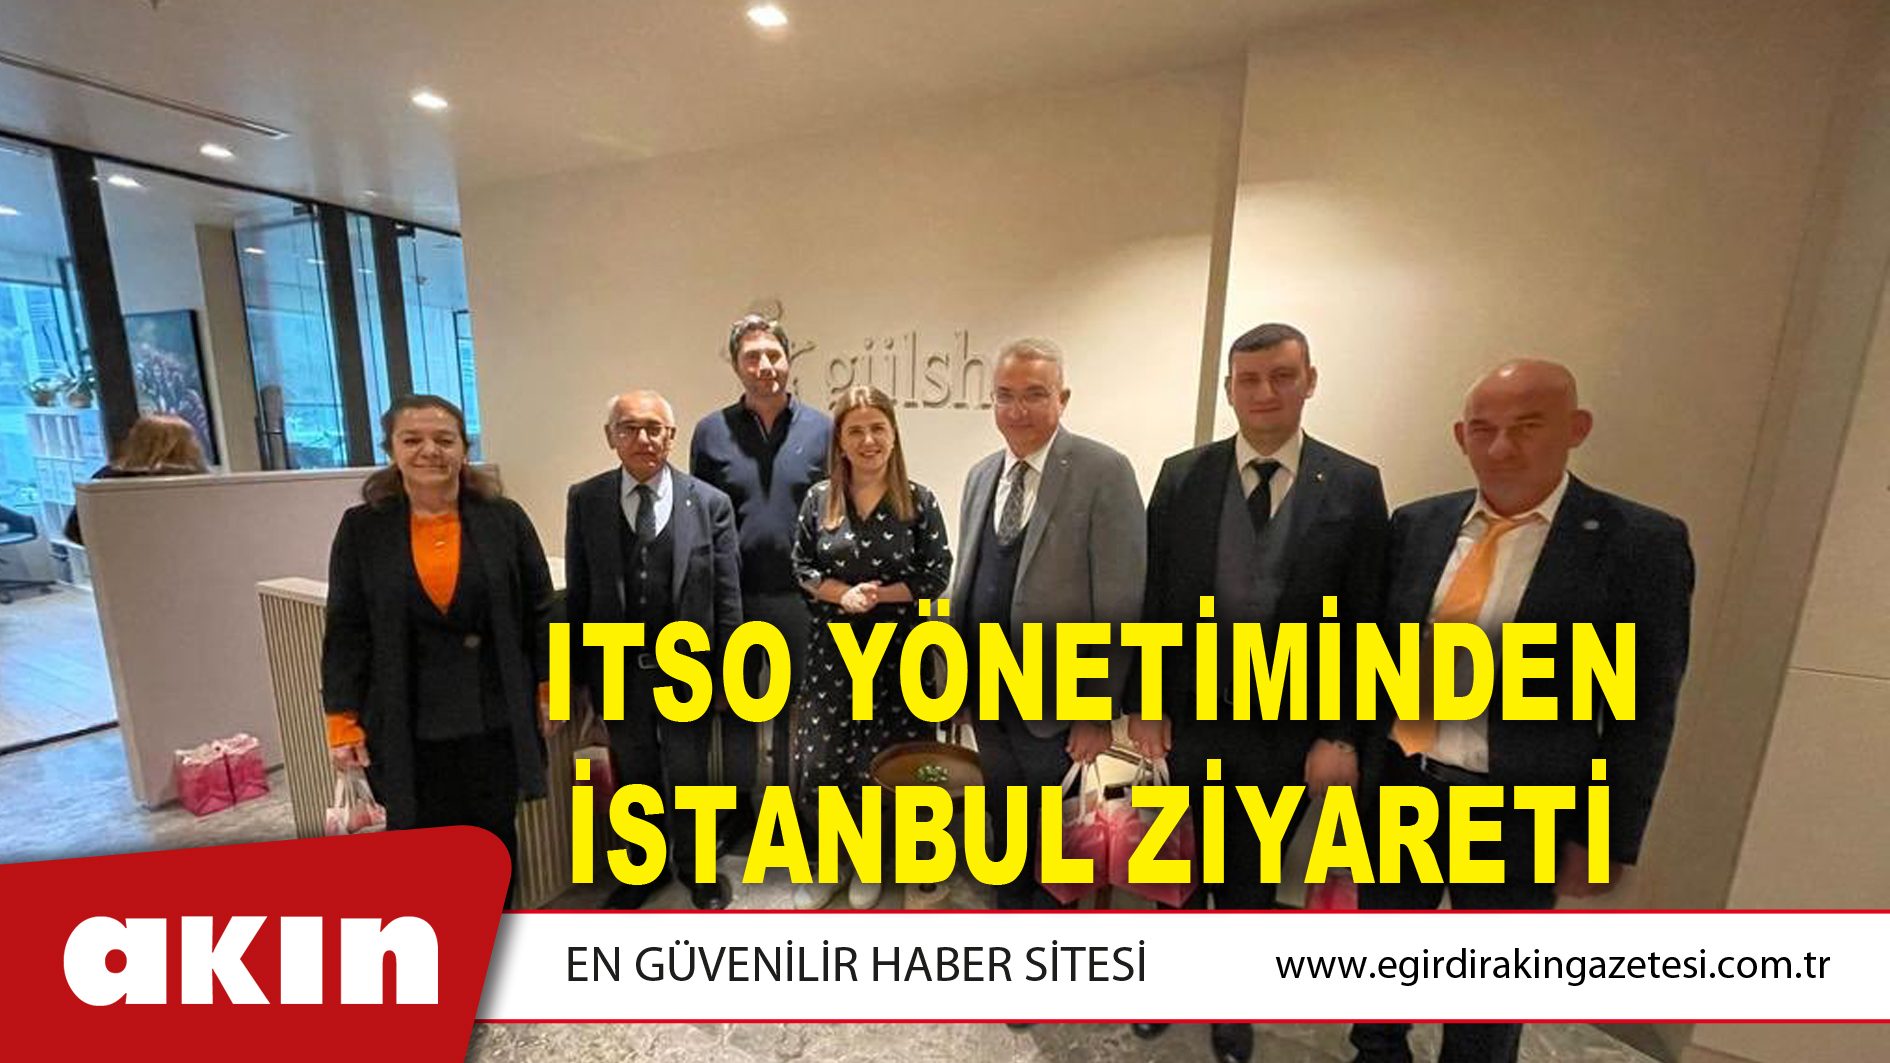 ITSO Yönetiminden İstanbul Ziyareti